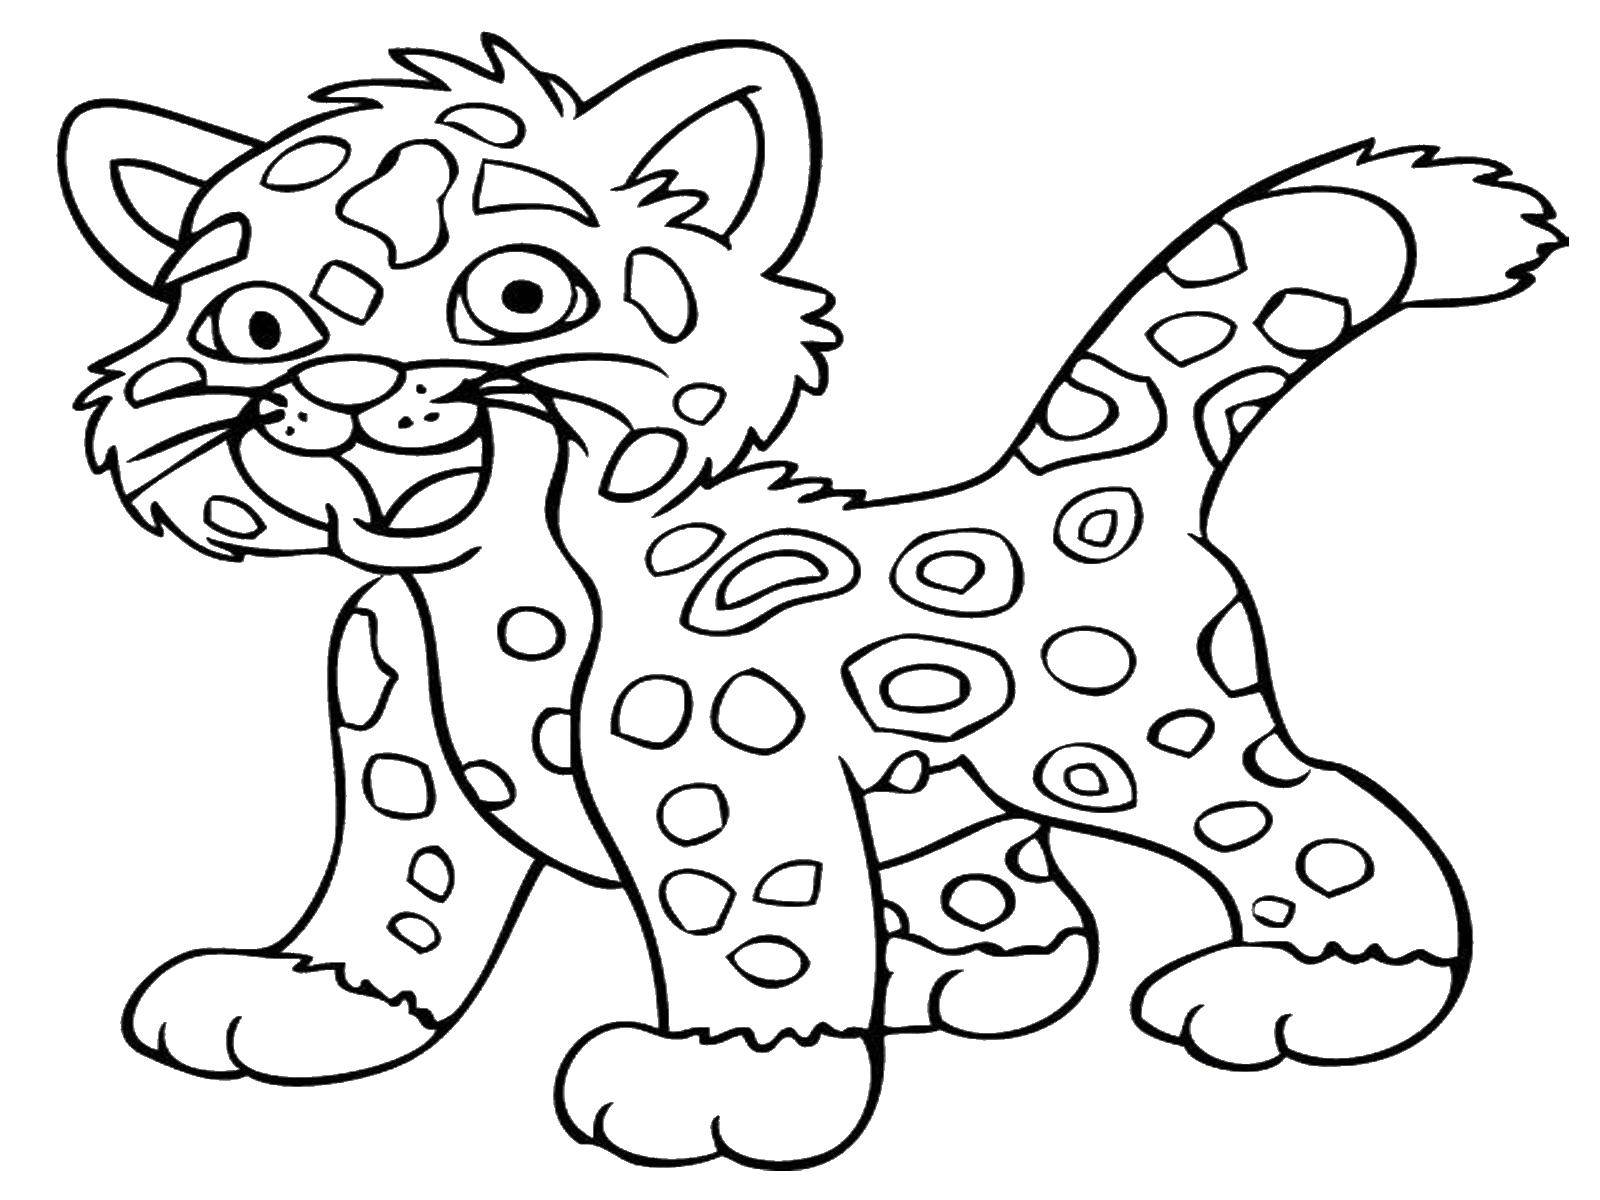 Название: Раскраска Малыш леопард. Категория: животные. Теги: животные, леопард, маленький леопард.